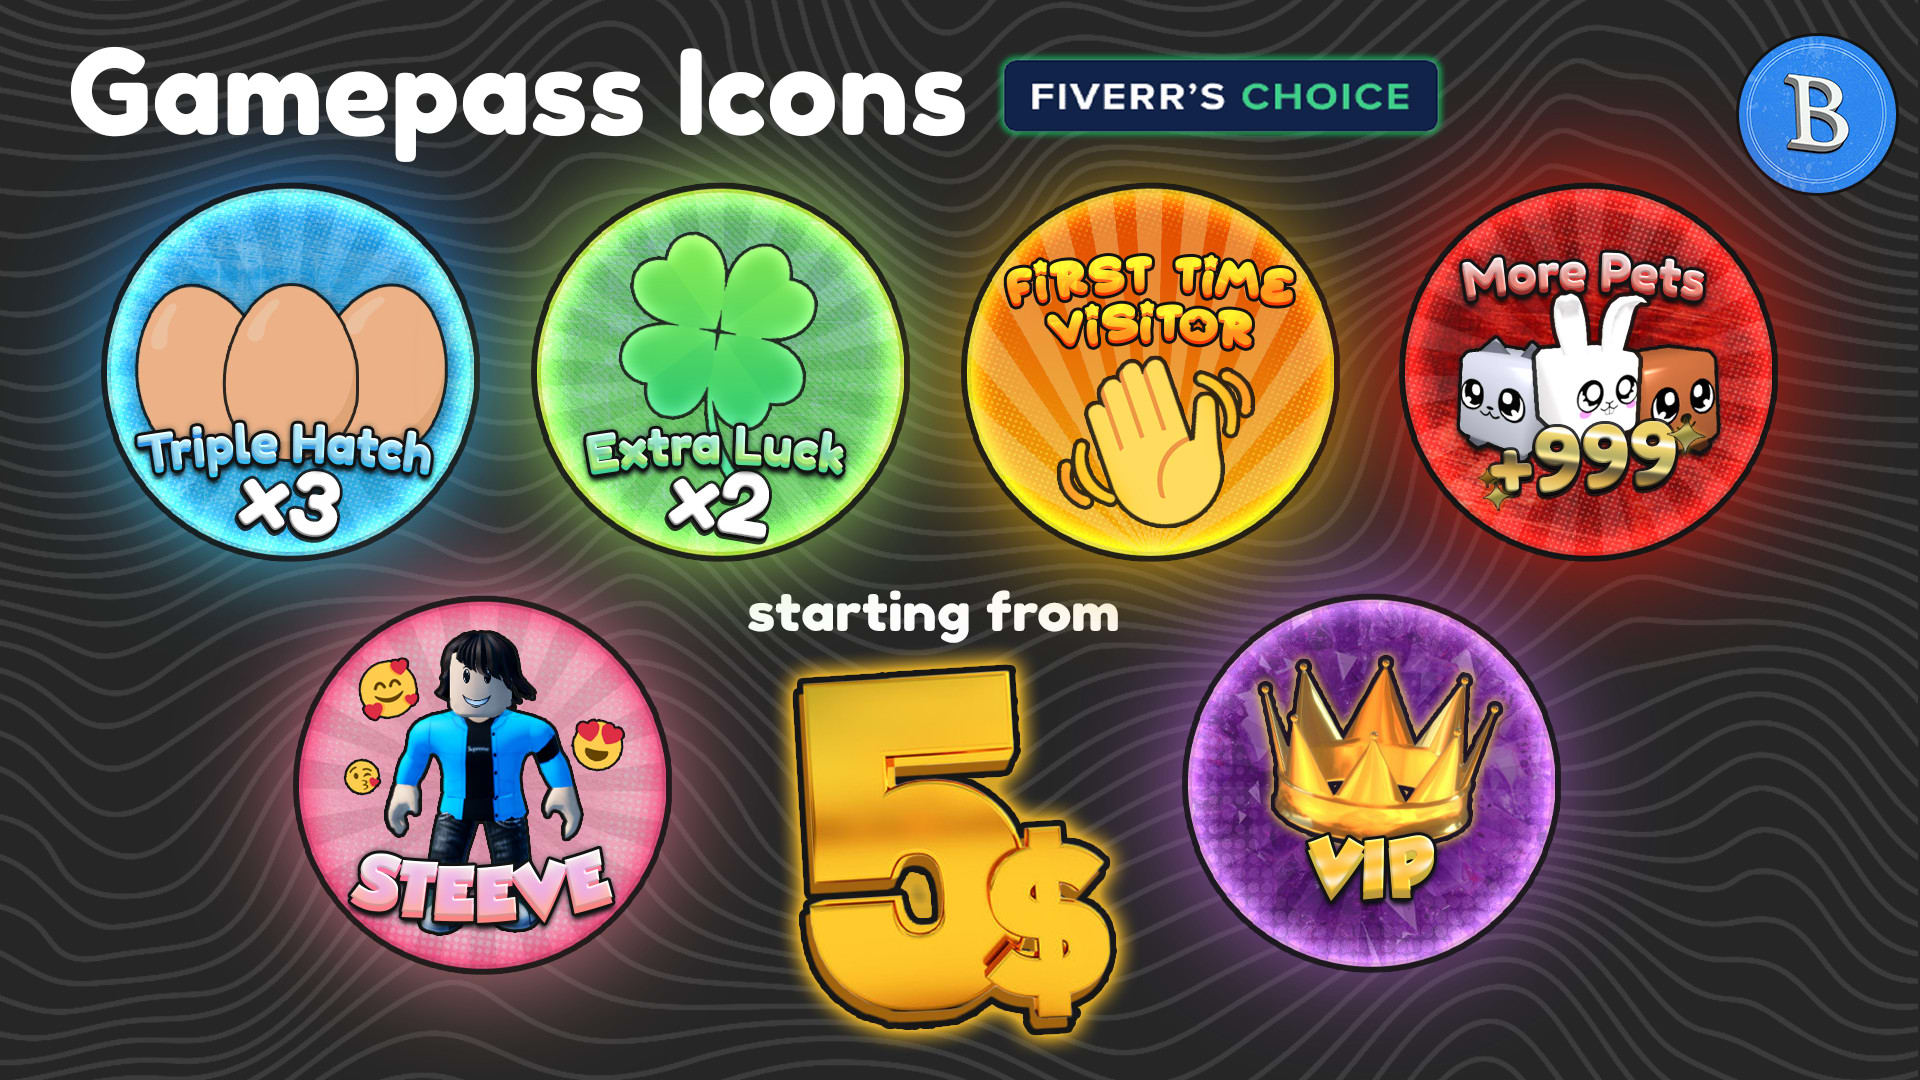 ROBLOX GFX TUTORIAL: Gamepass Icons